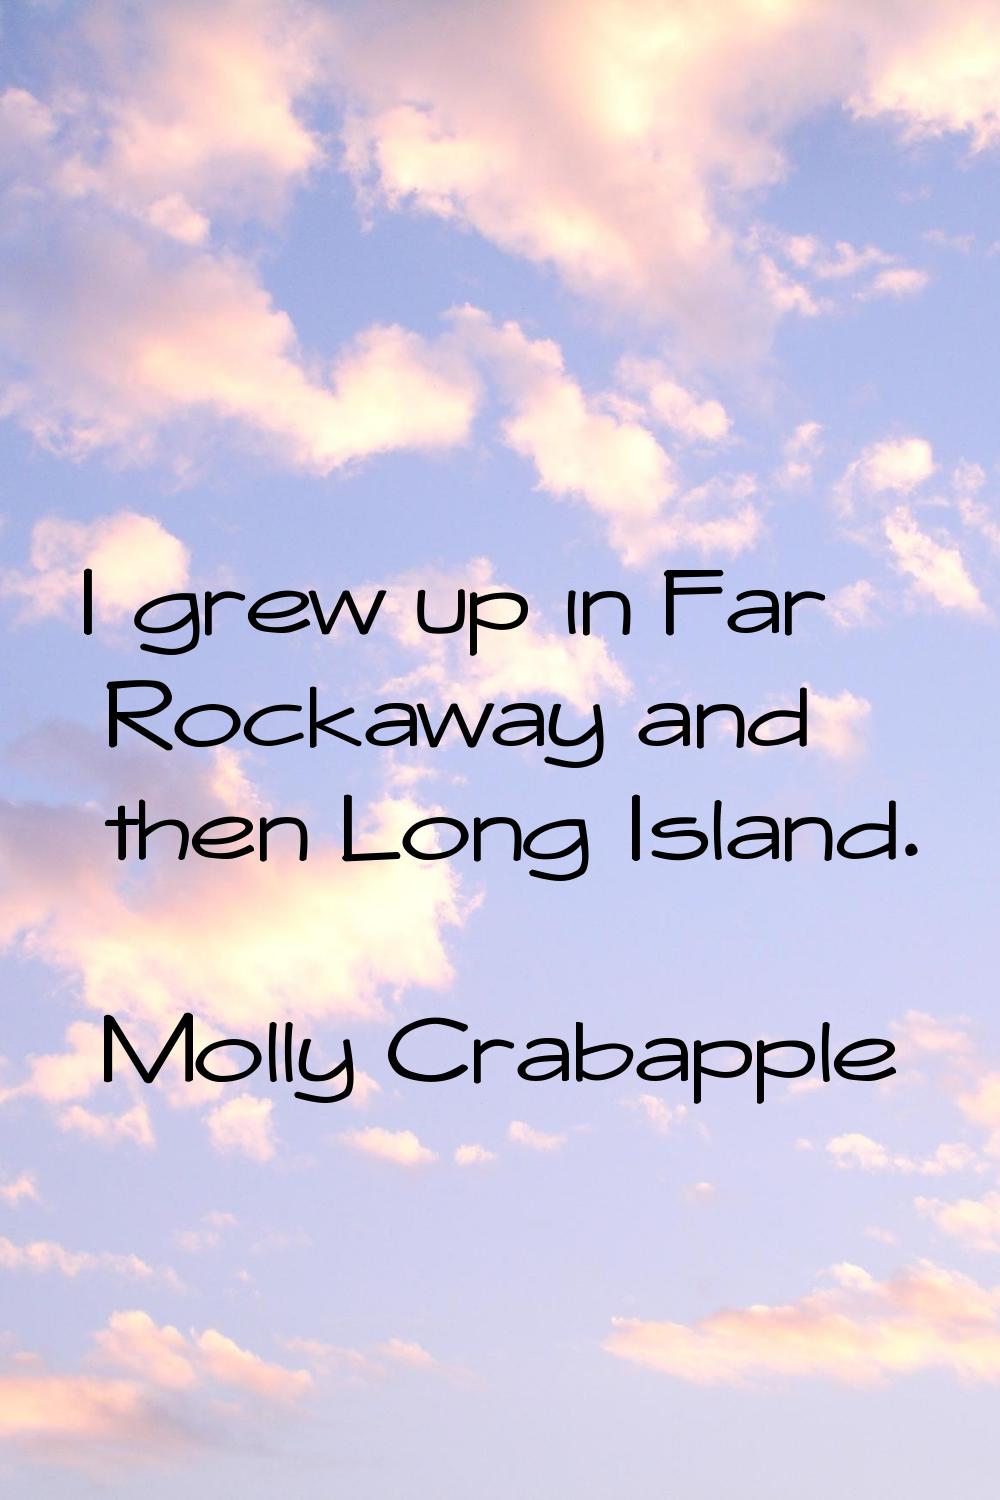 I grew up in Far Rockaway and then Long Island.